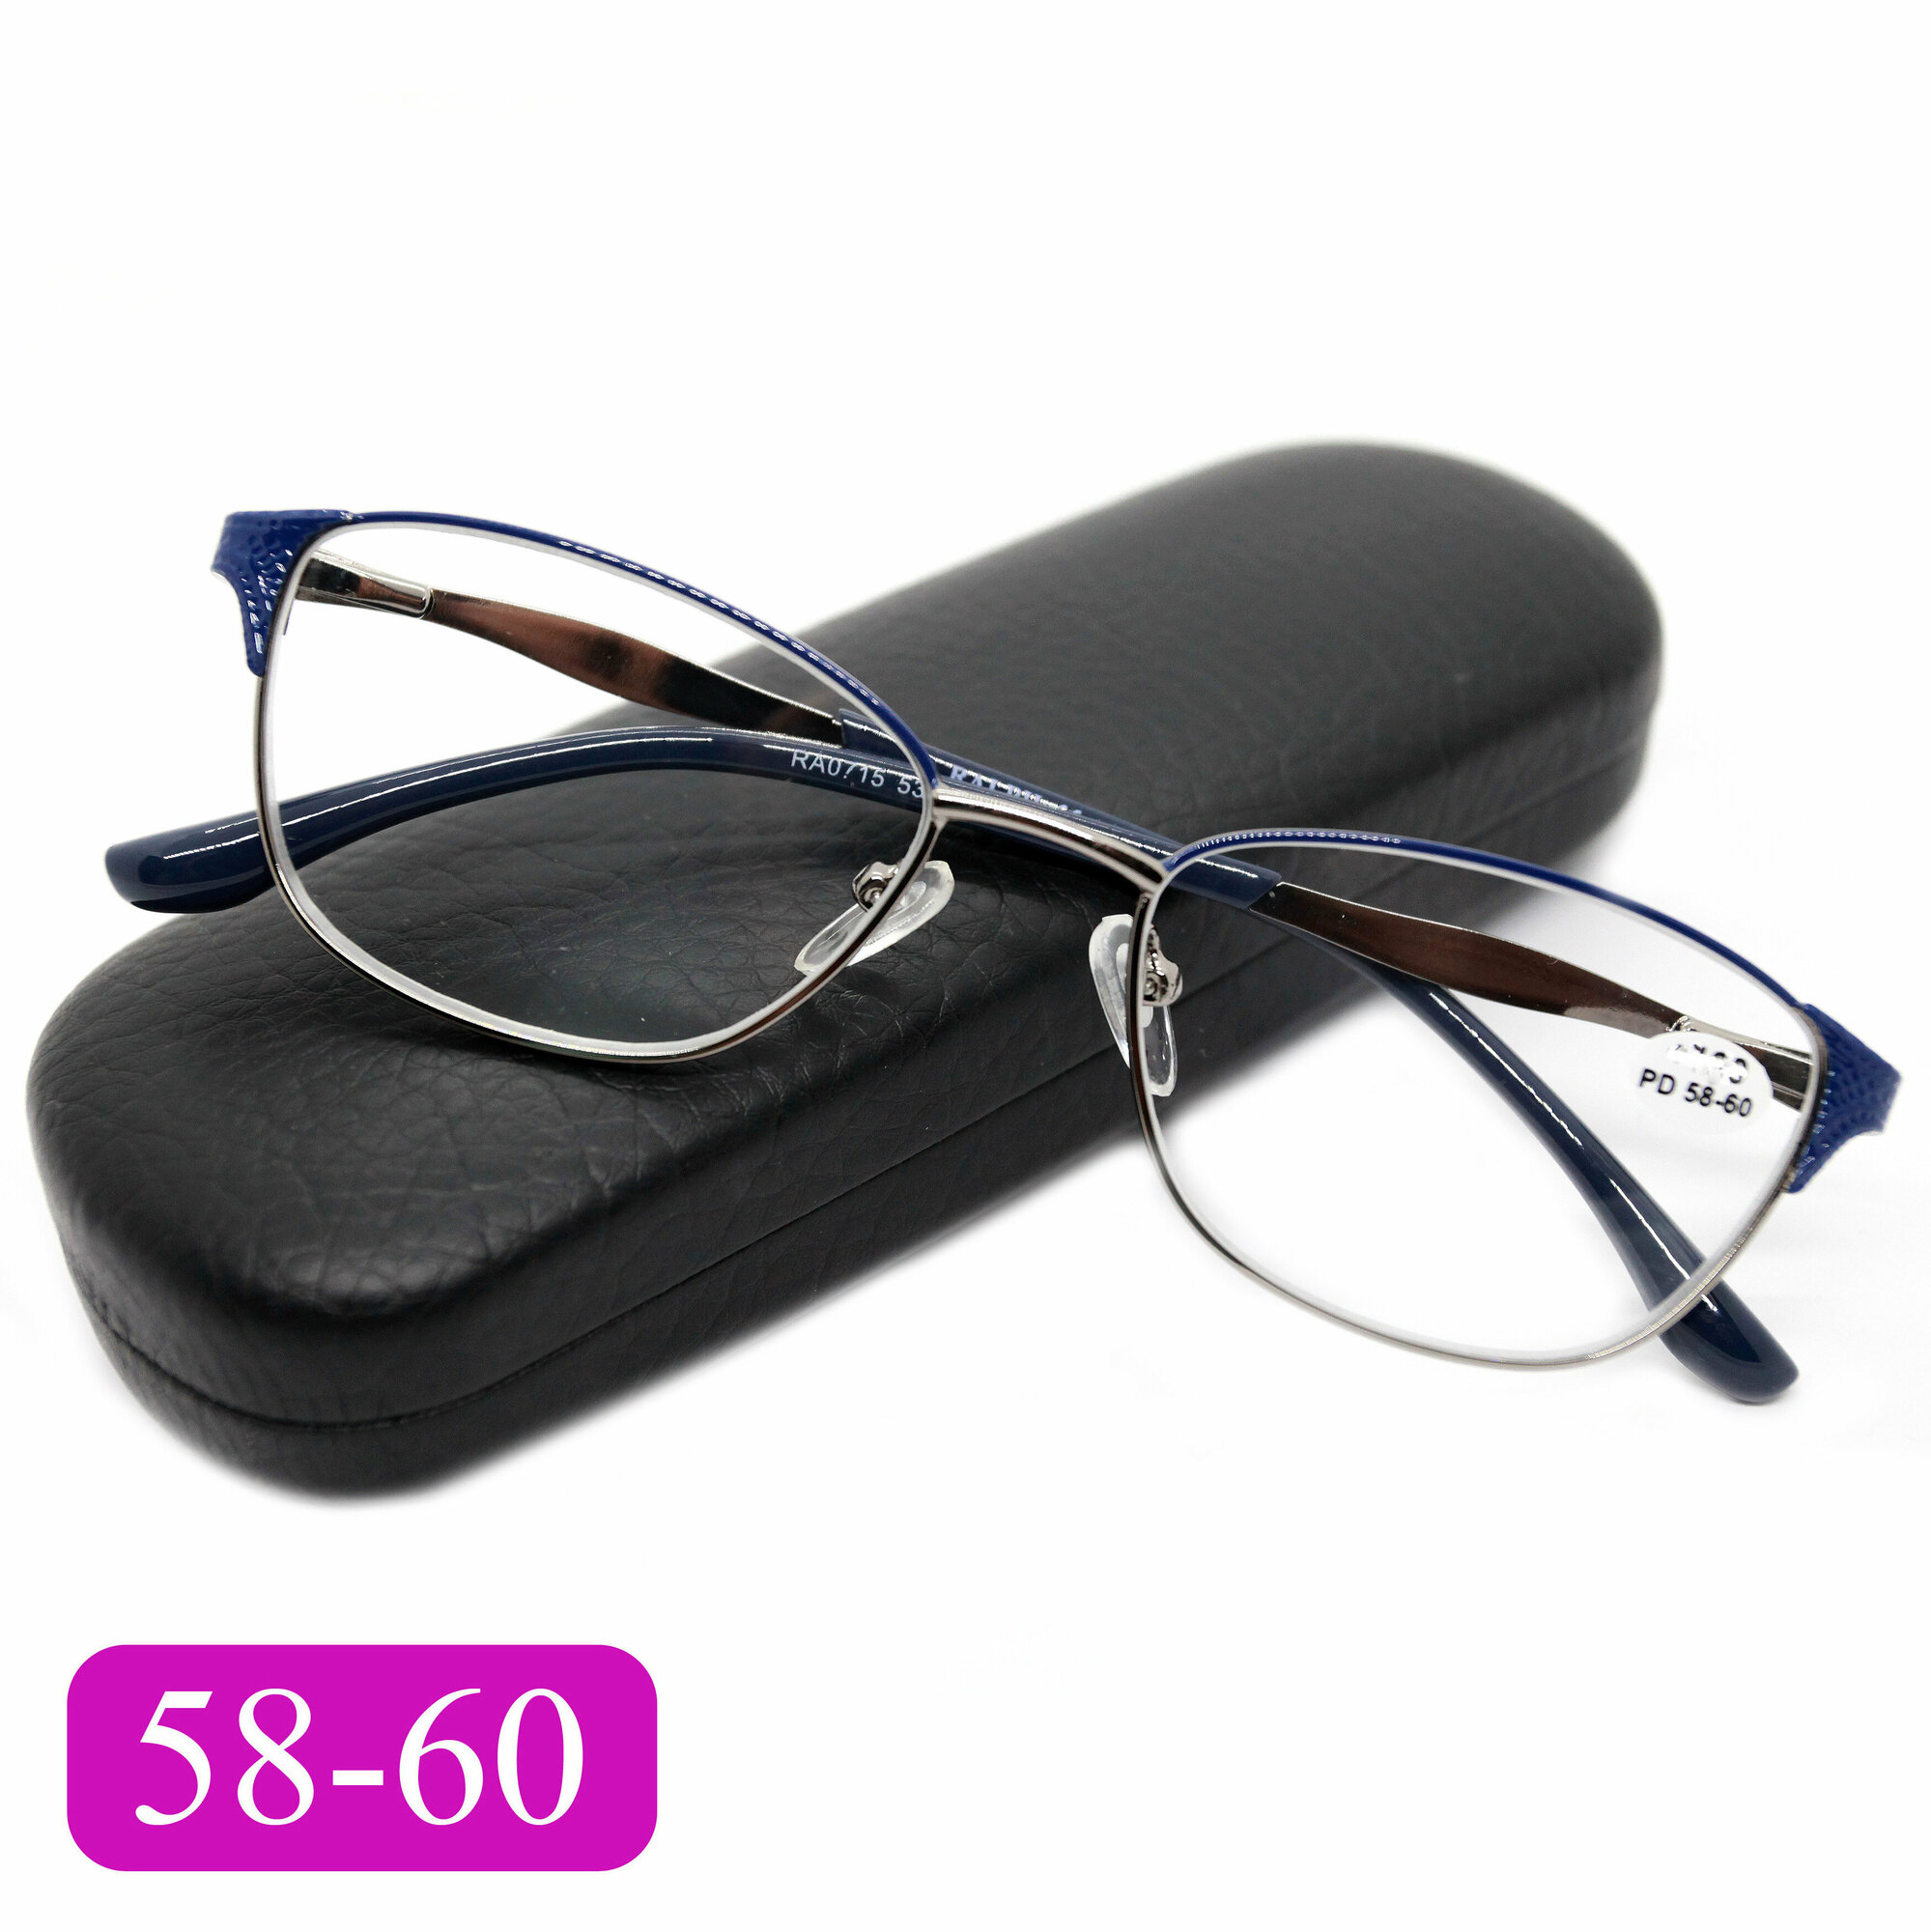 Женские очки PD 58-60 (+2.75) Ralph 0715 C8, цвет синий, с футляром, РЦ 58-60